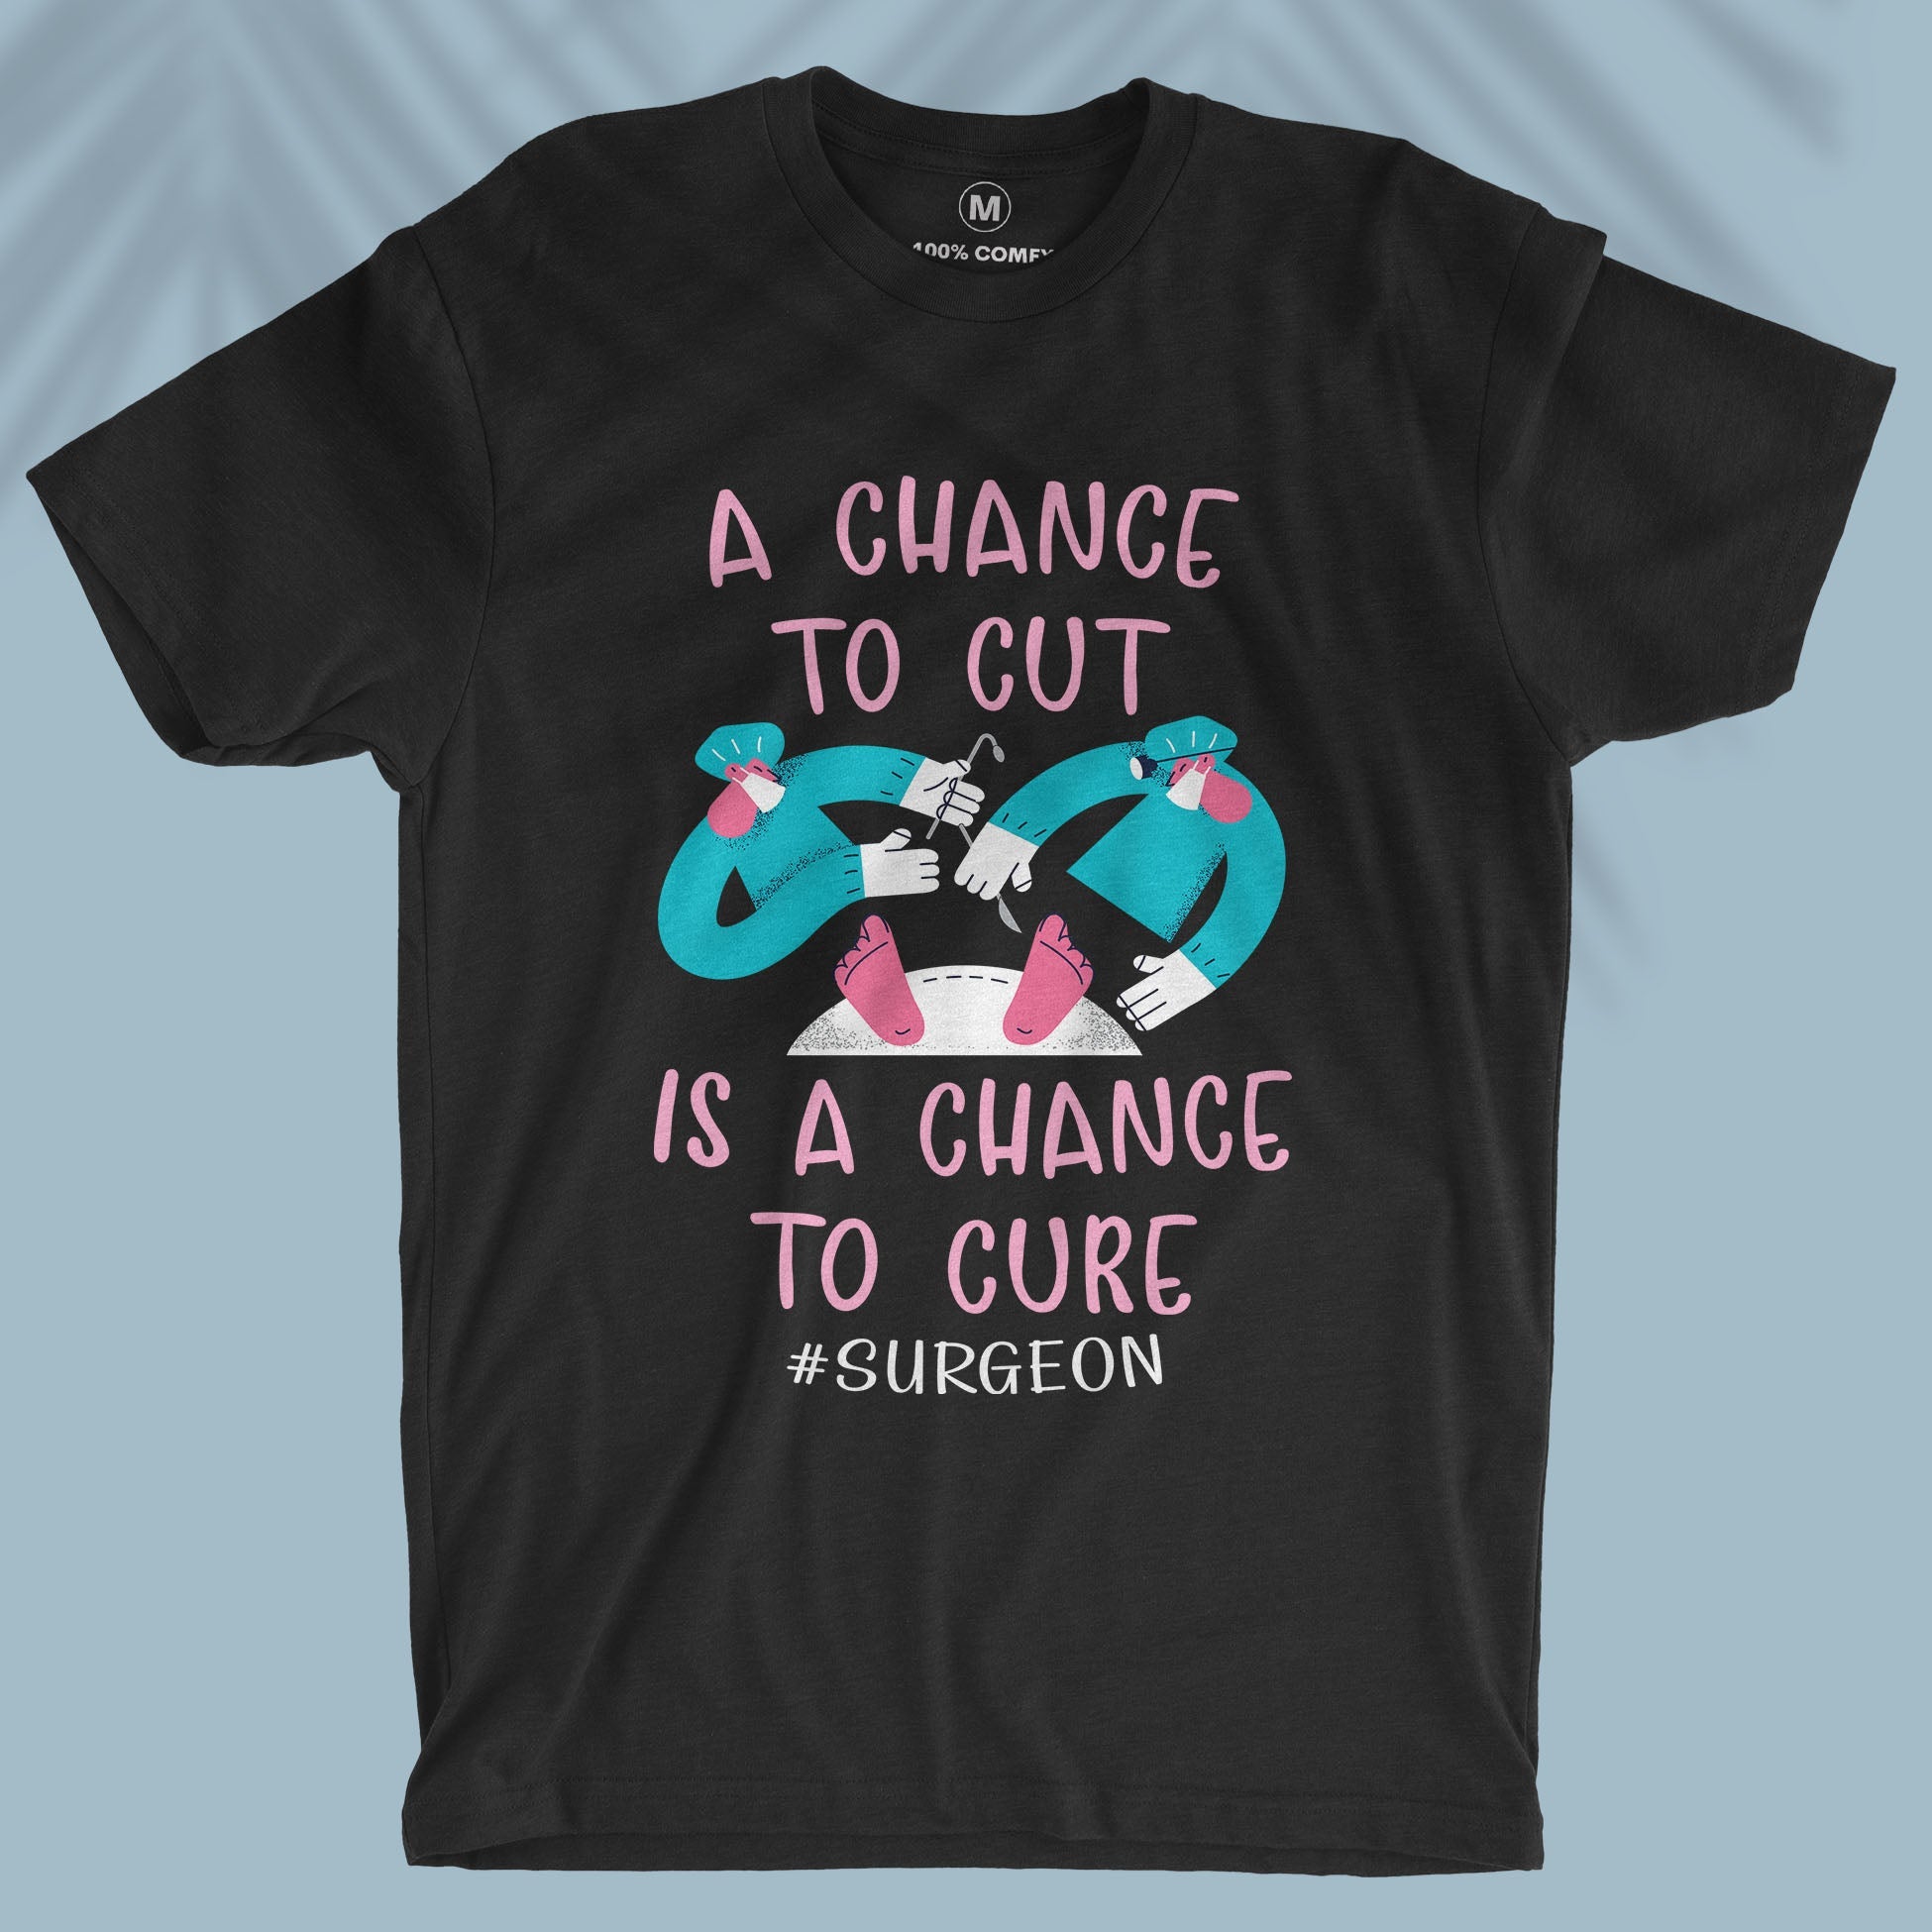 A Chance To Cut - Unisex T-shirt